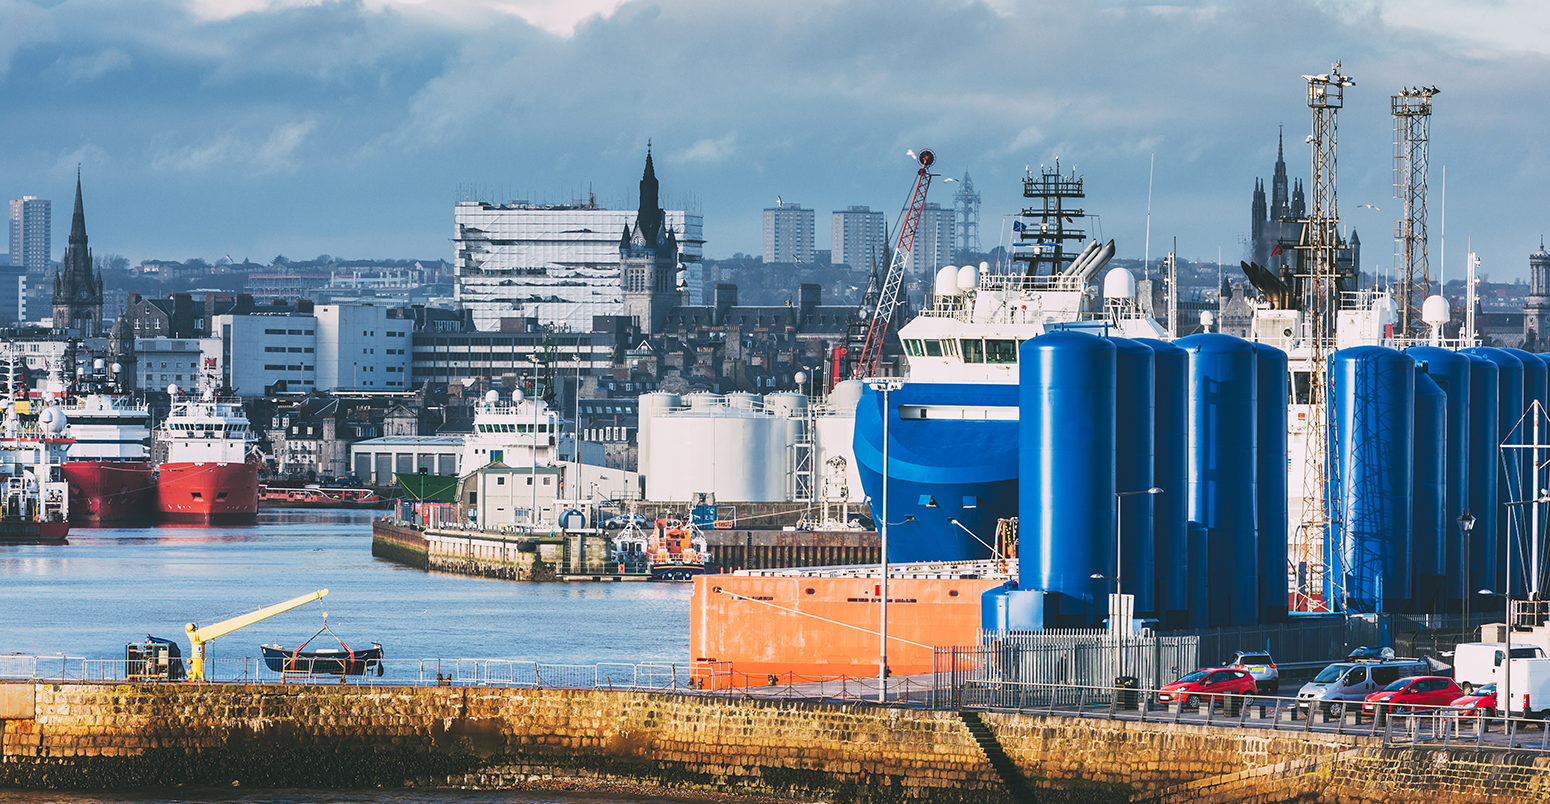 Aberdeen, the oil capital of Scotland